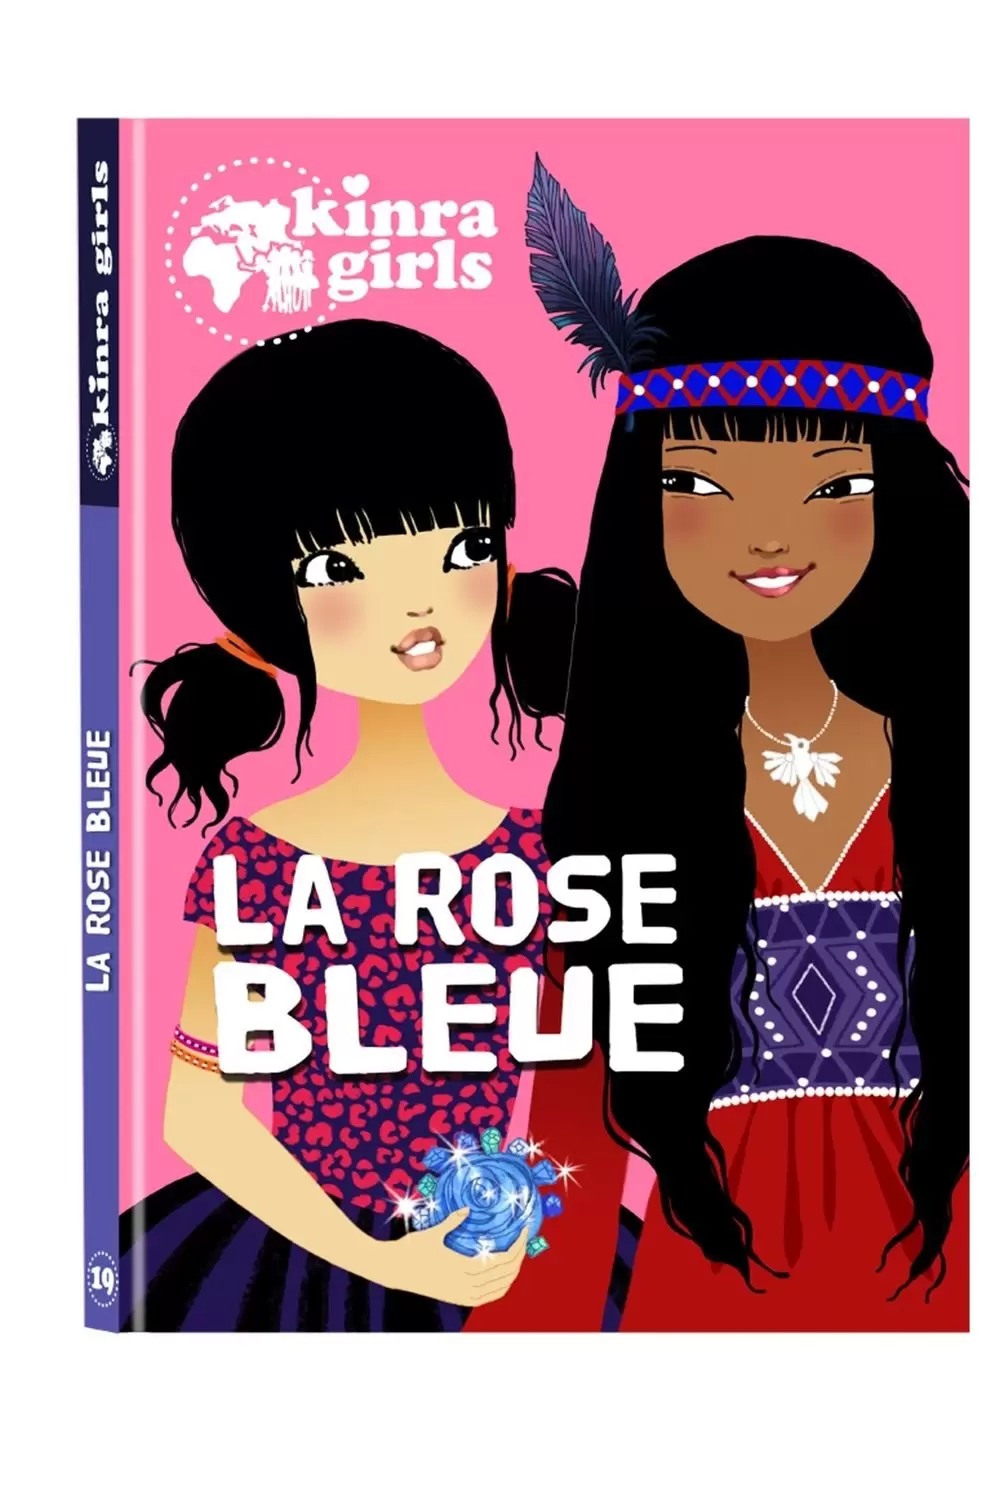 Kinra girls - La rose bleue